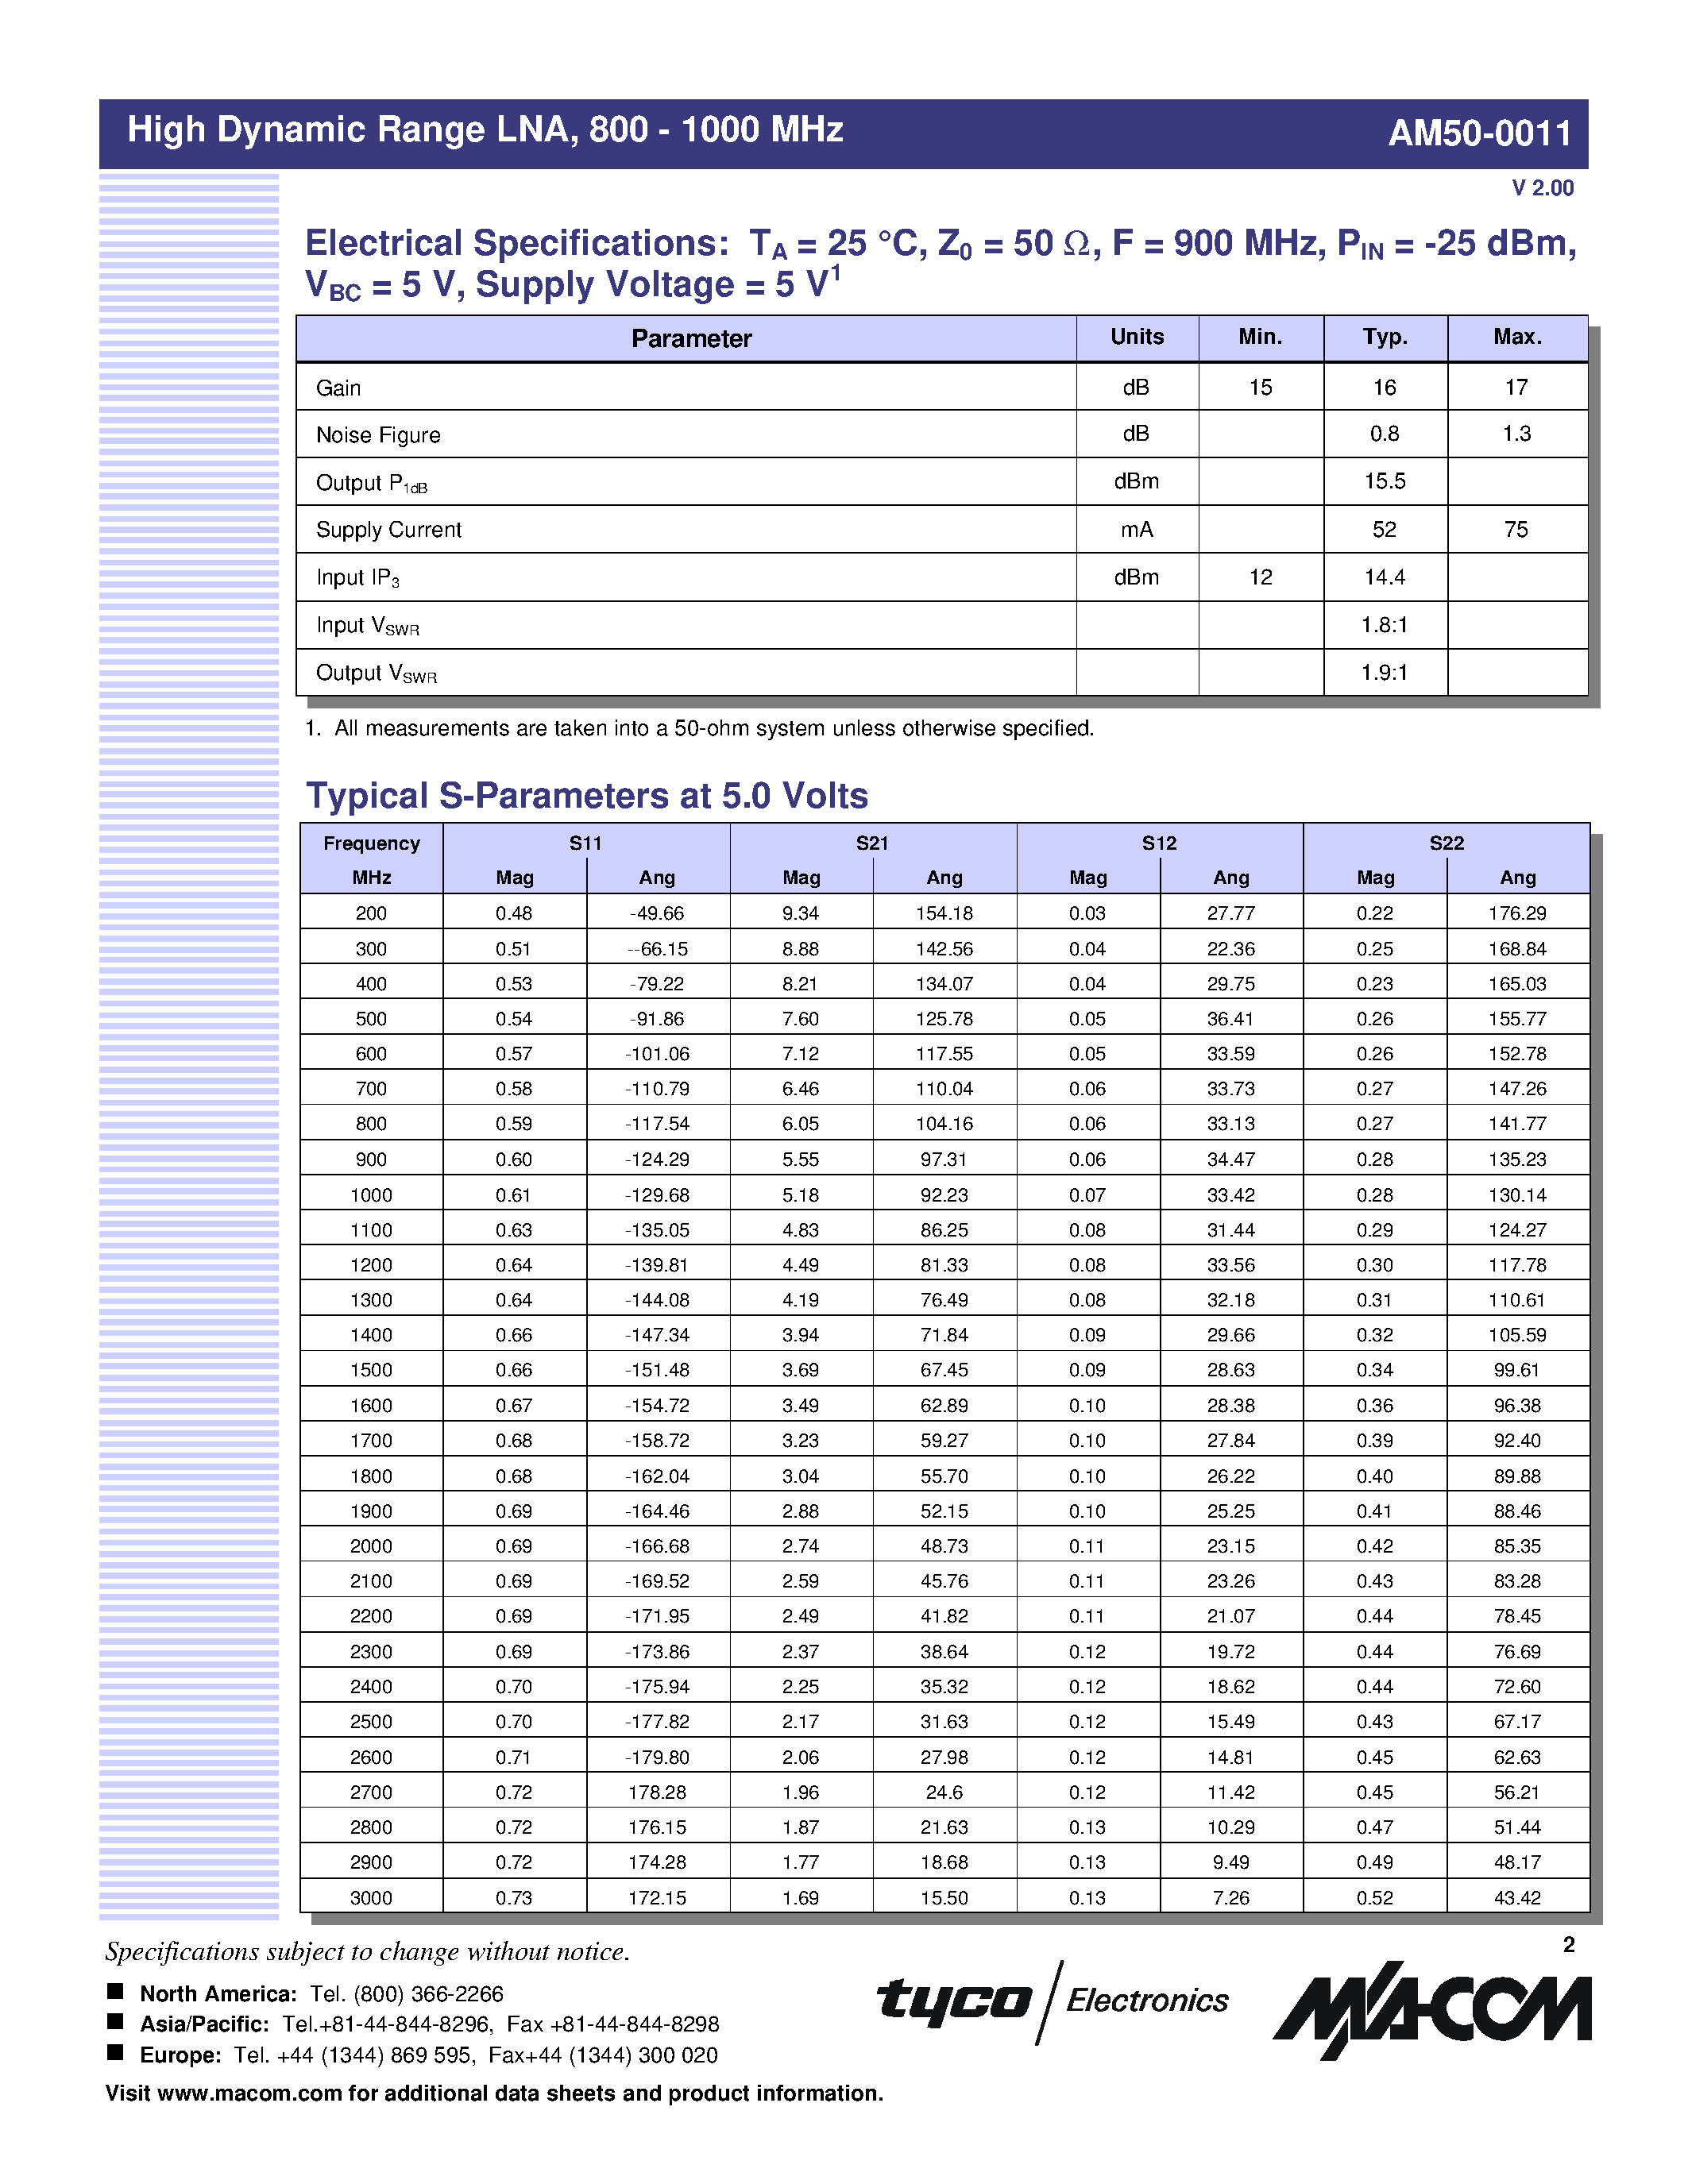 Datasheet AM50-0011SMB - High Dynamic Range LNA 800 - 1000 MHz page 2